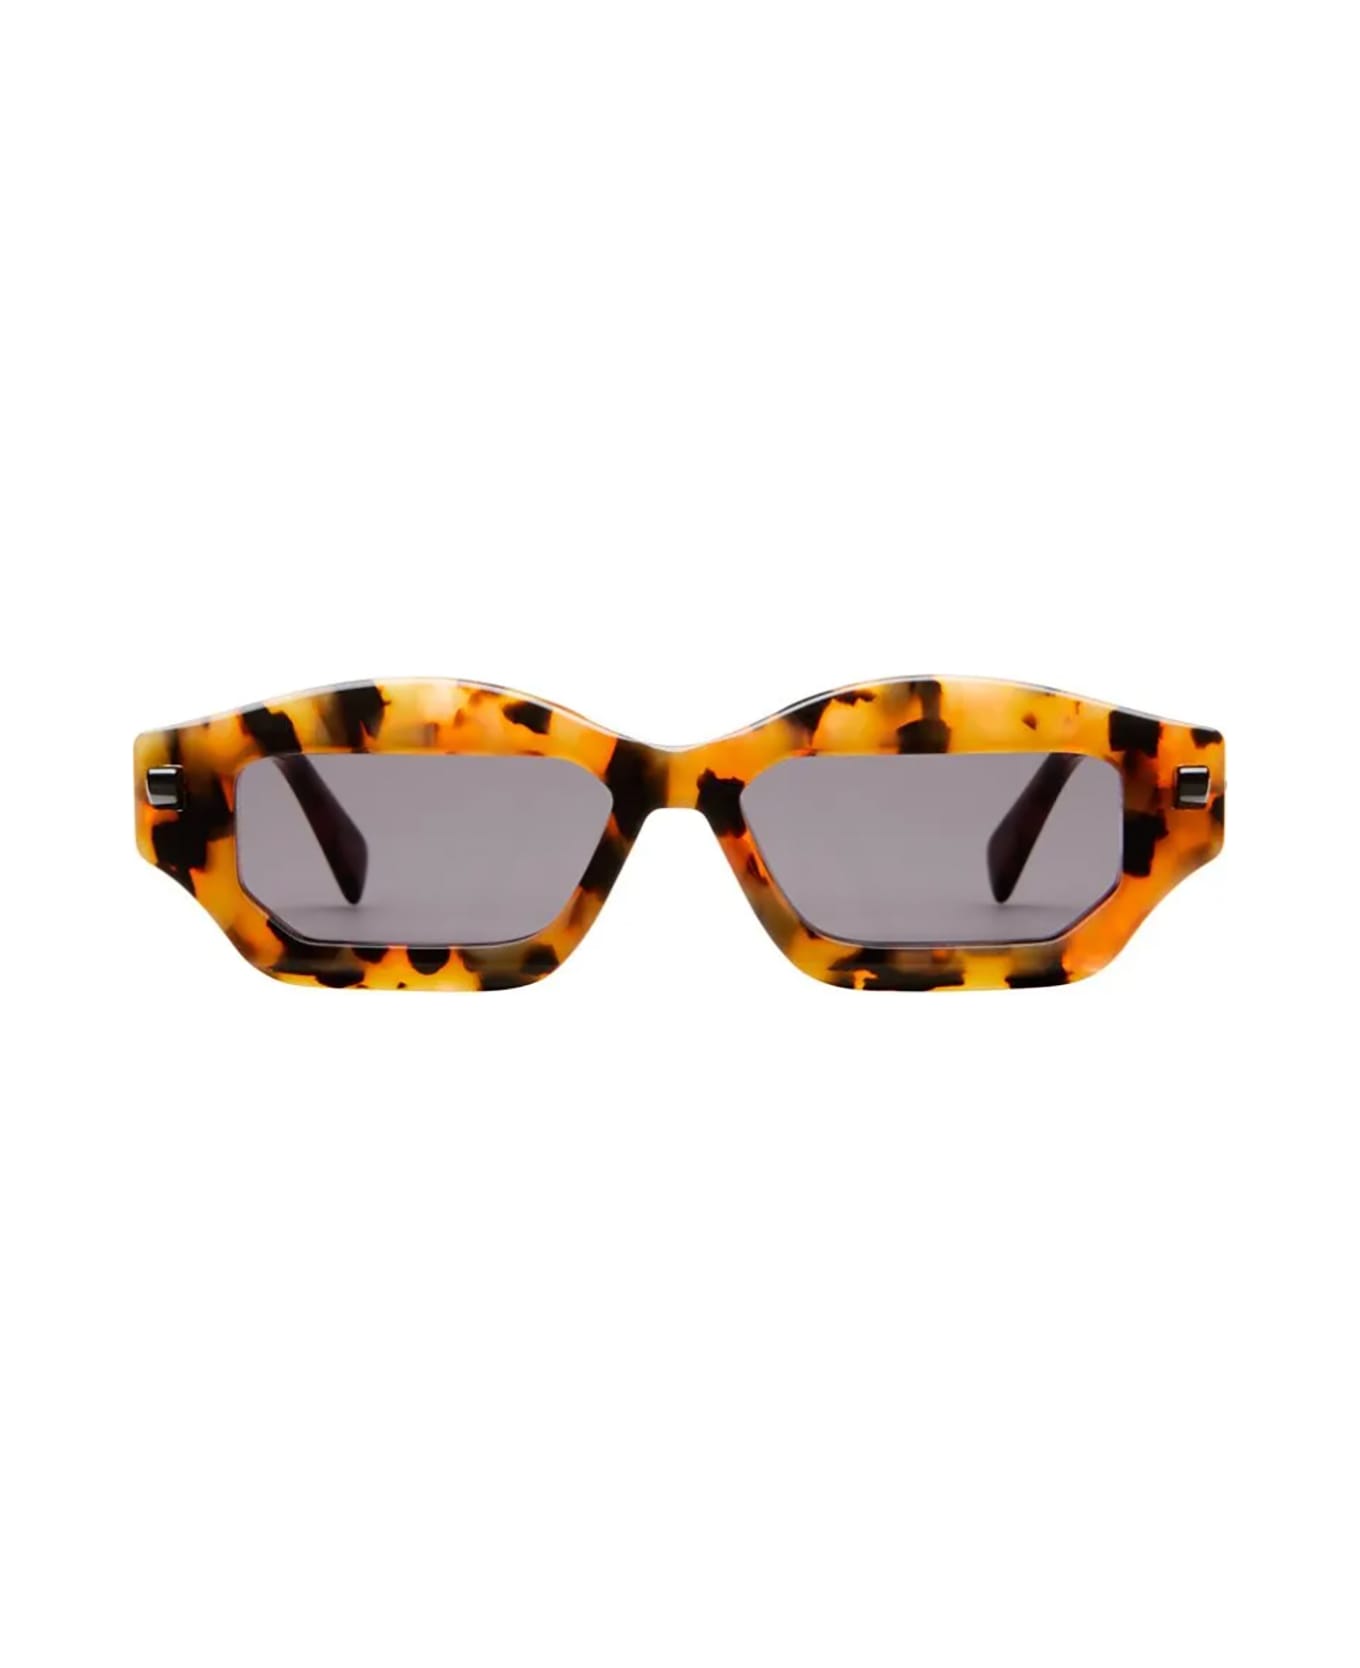 Kuboraum Q6 Sunglasses - Hx サングラス